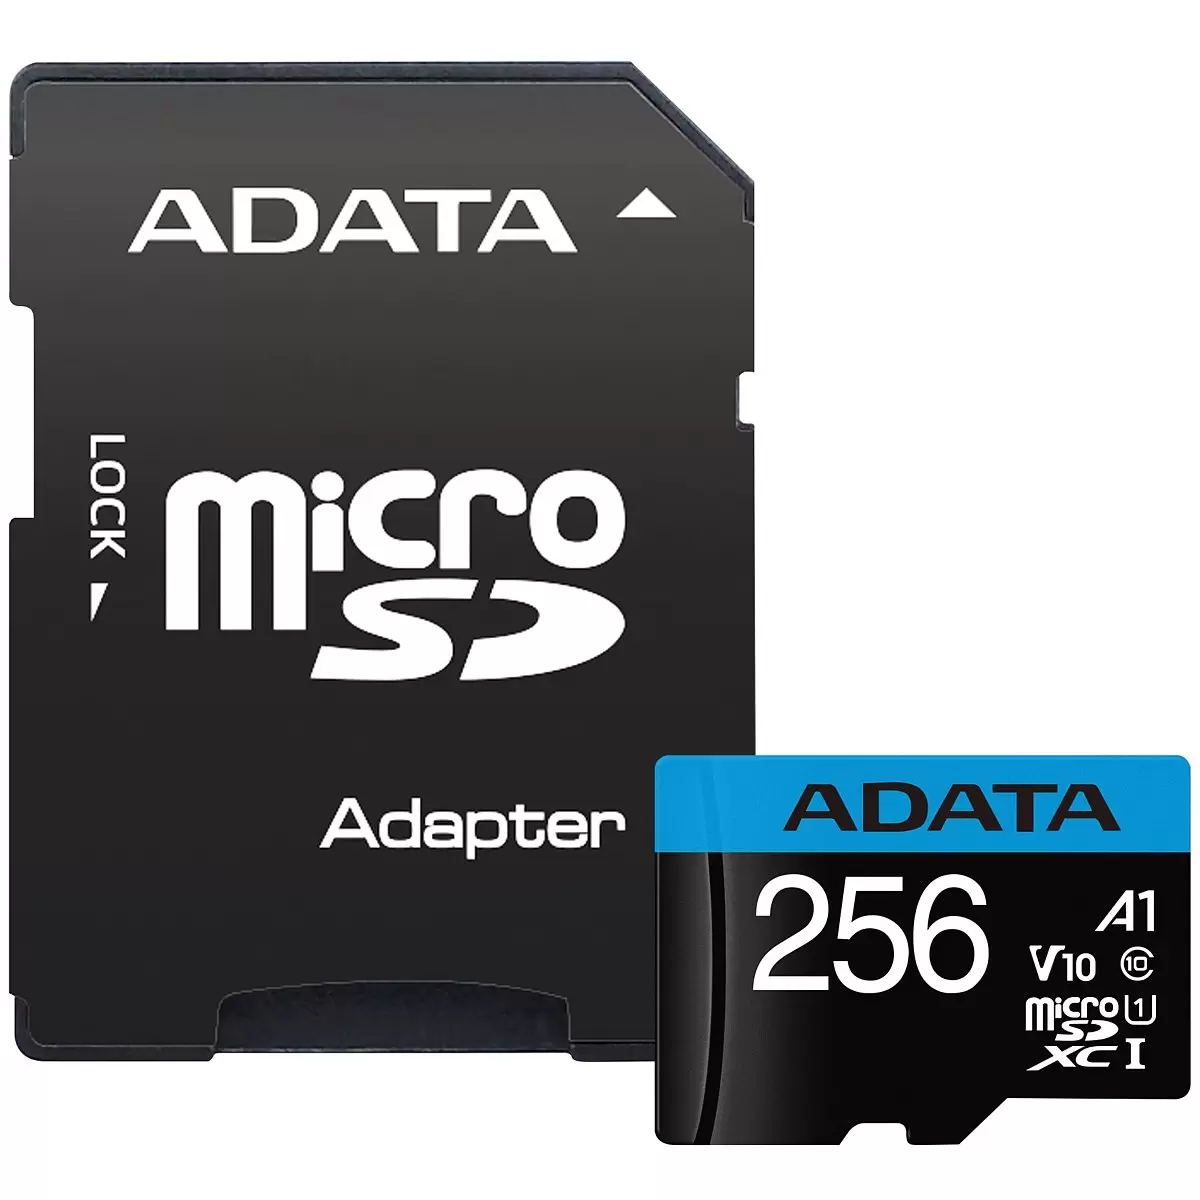 ADATA 256GB Micro SDXC V10 100MB s   ad 